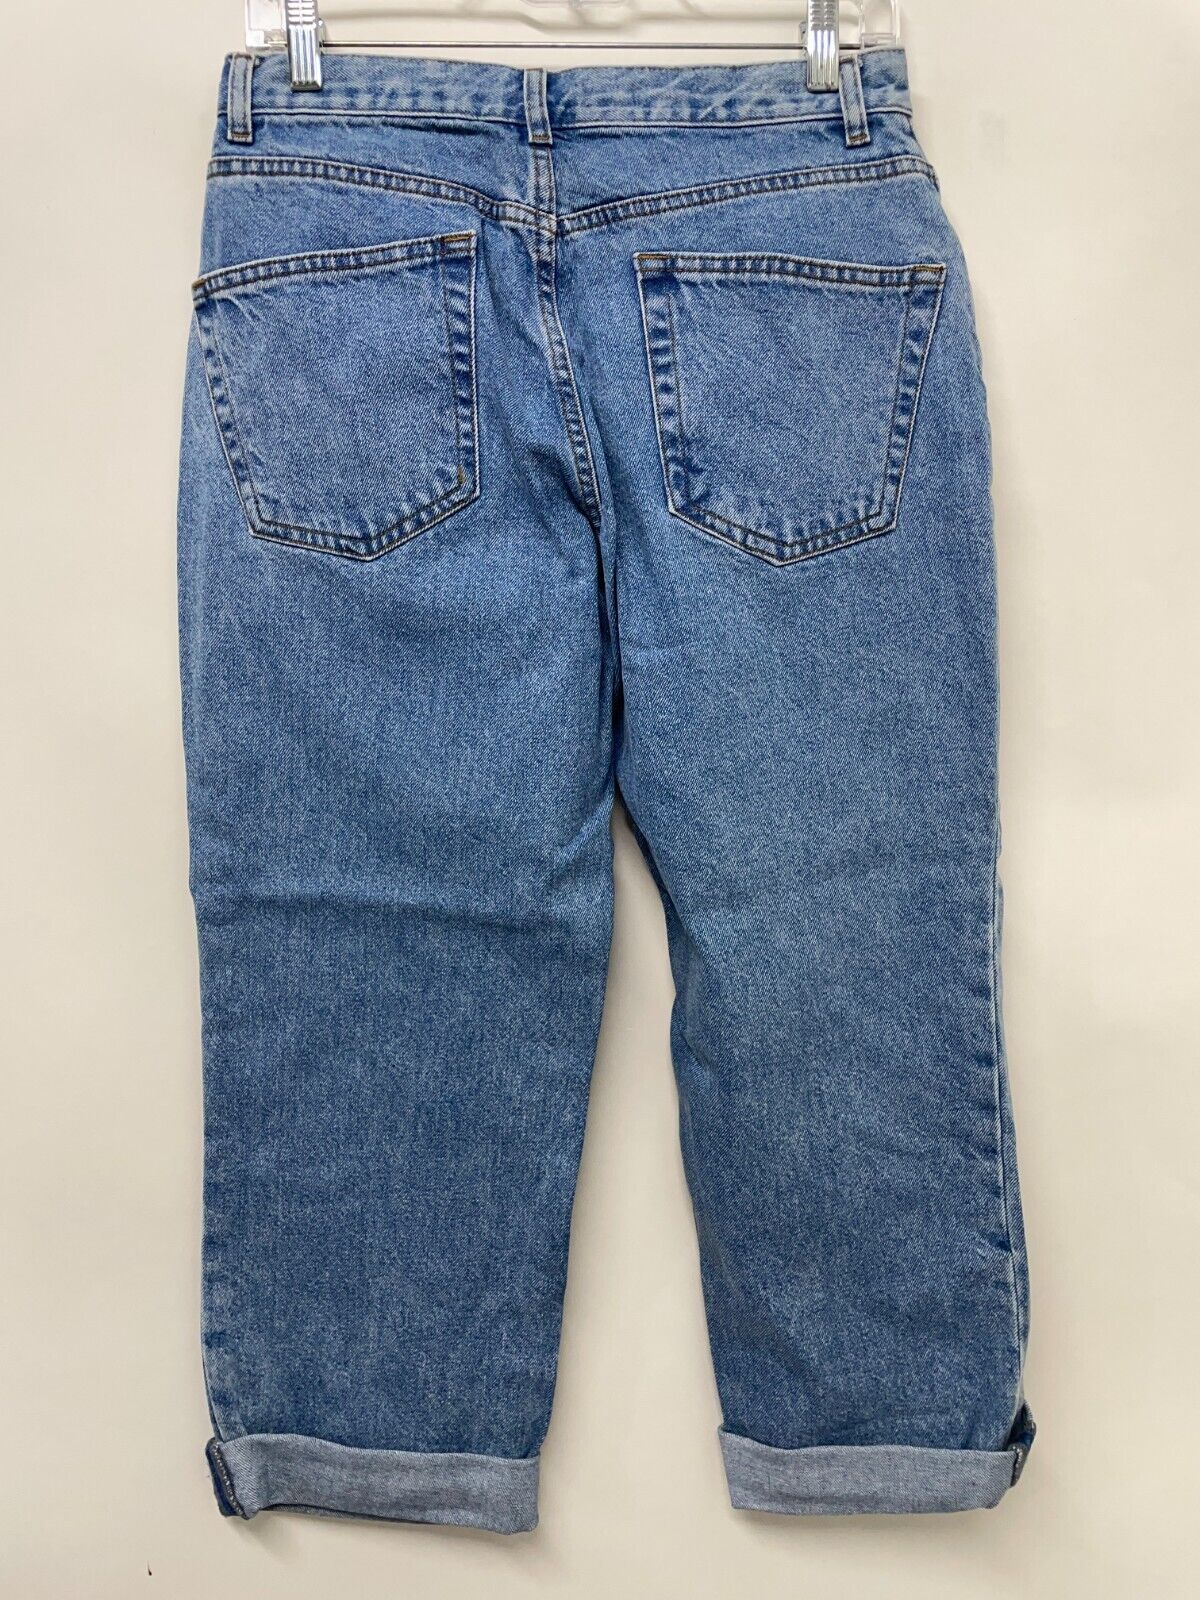 Asos Womens 30 Petite 90s Mid Rise Straight Leg Jeans Vintage Lightwash Blue